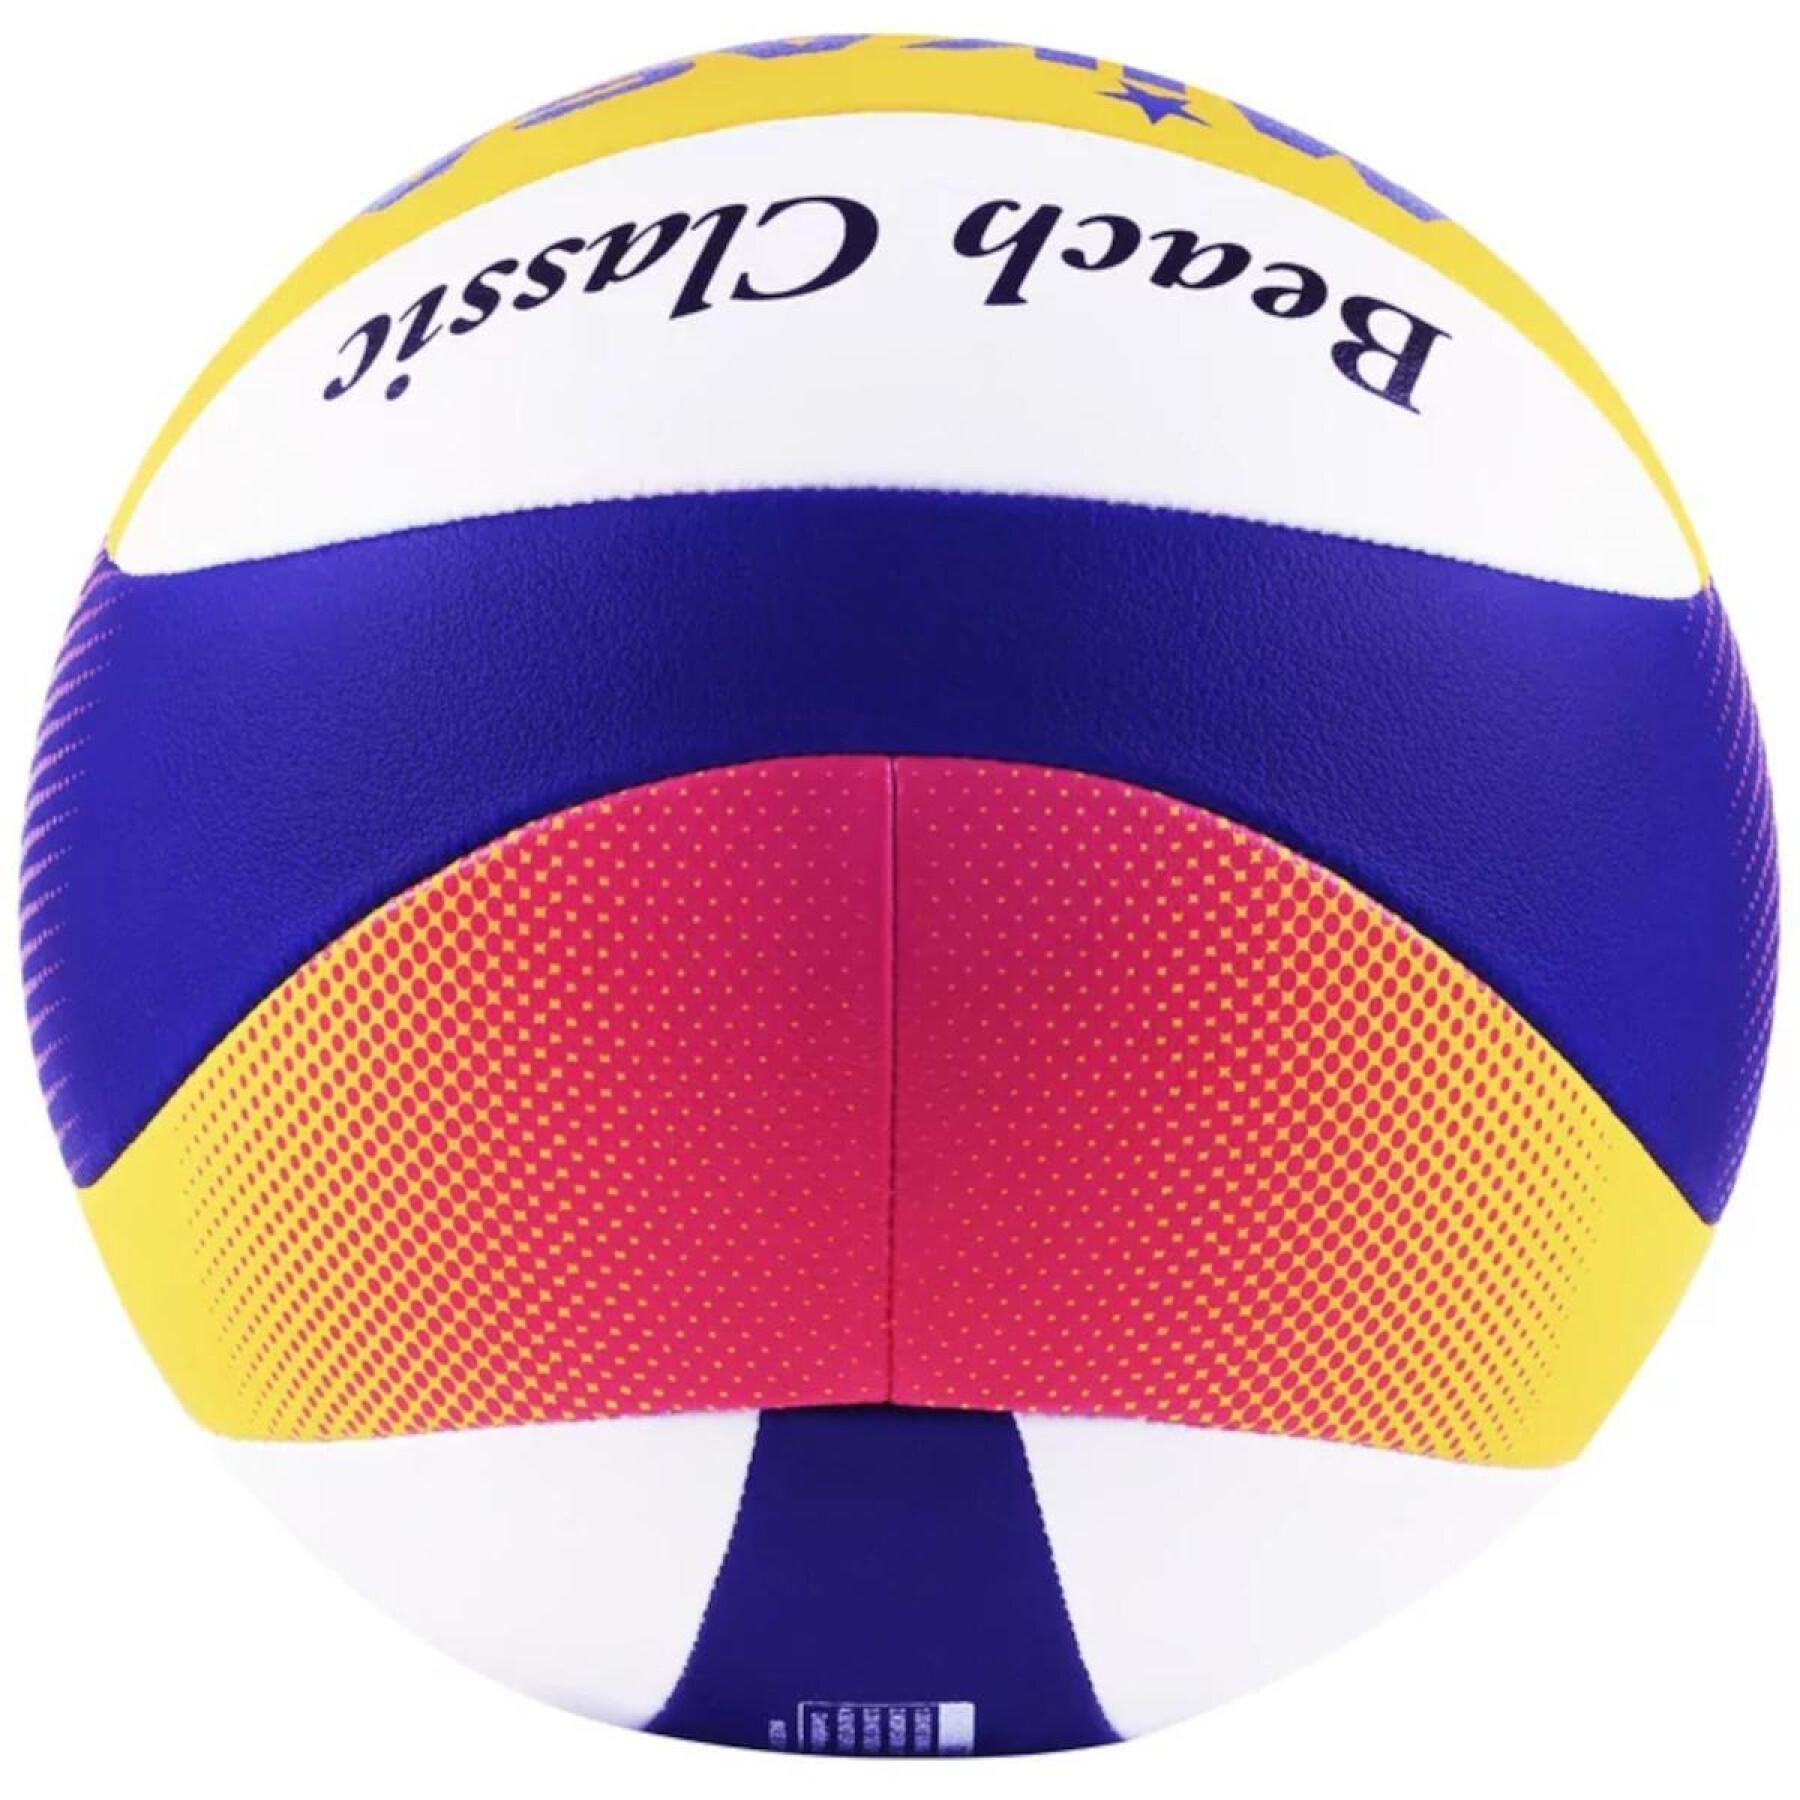 Ballon de volleyball Mikasa BV551C Beach Classic